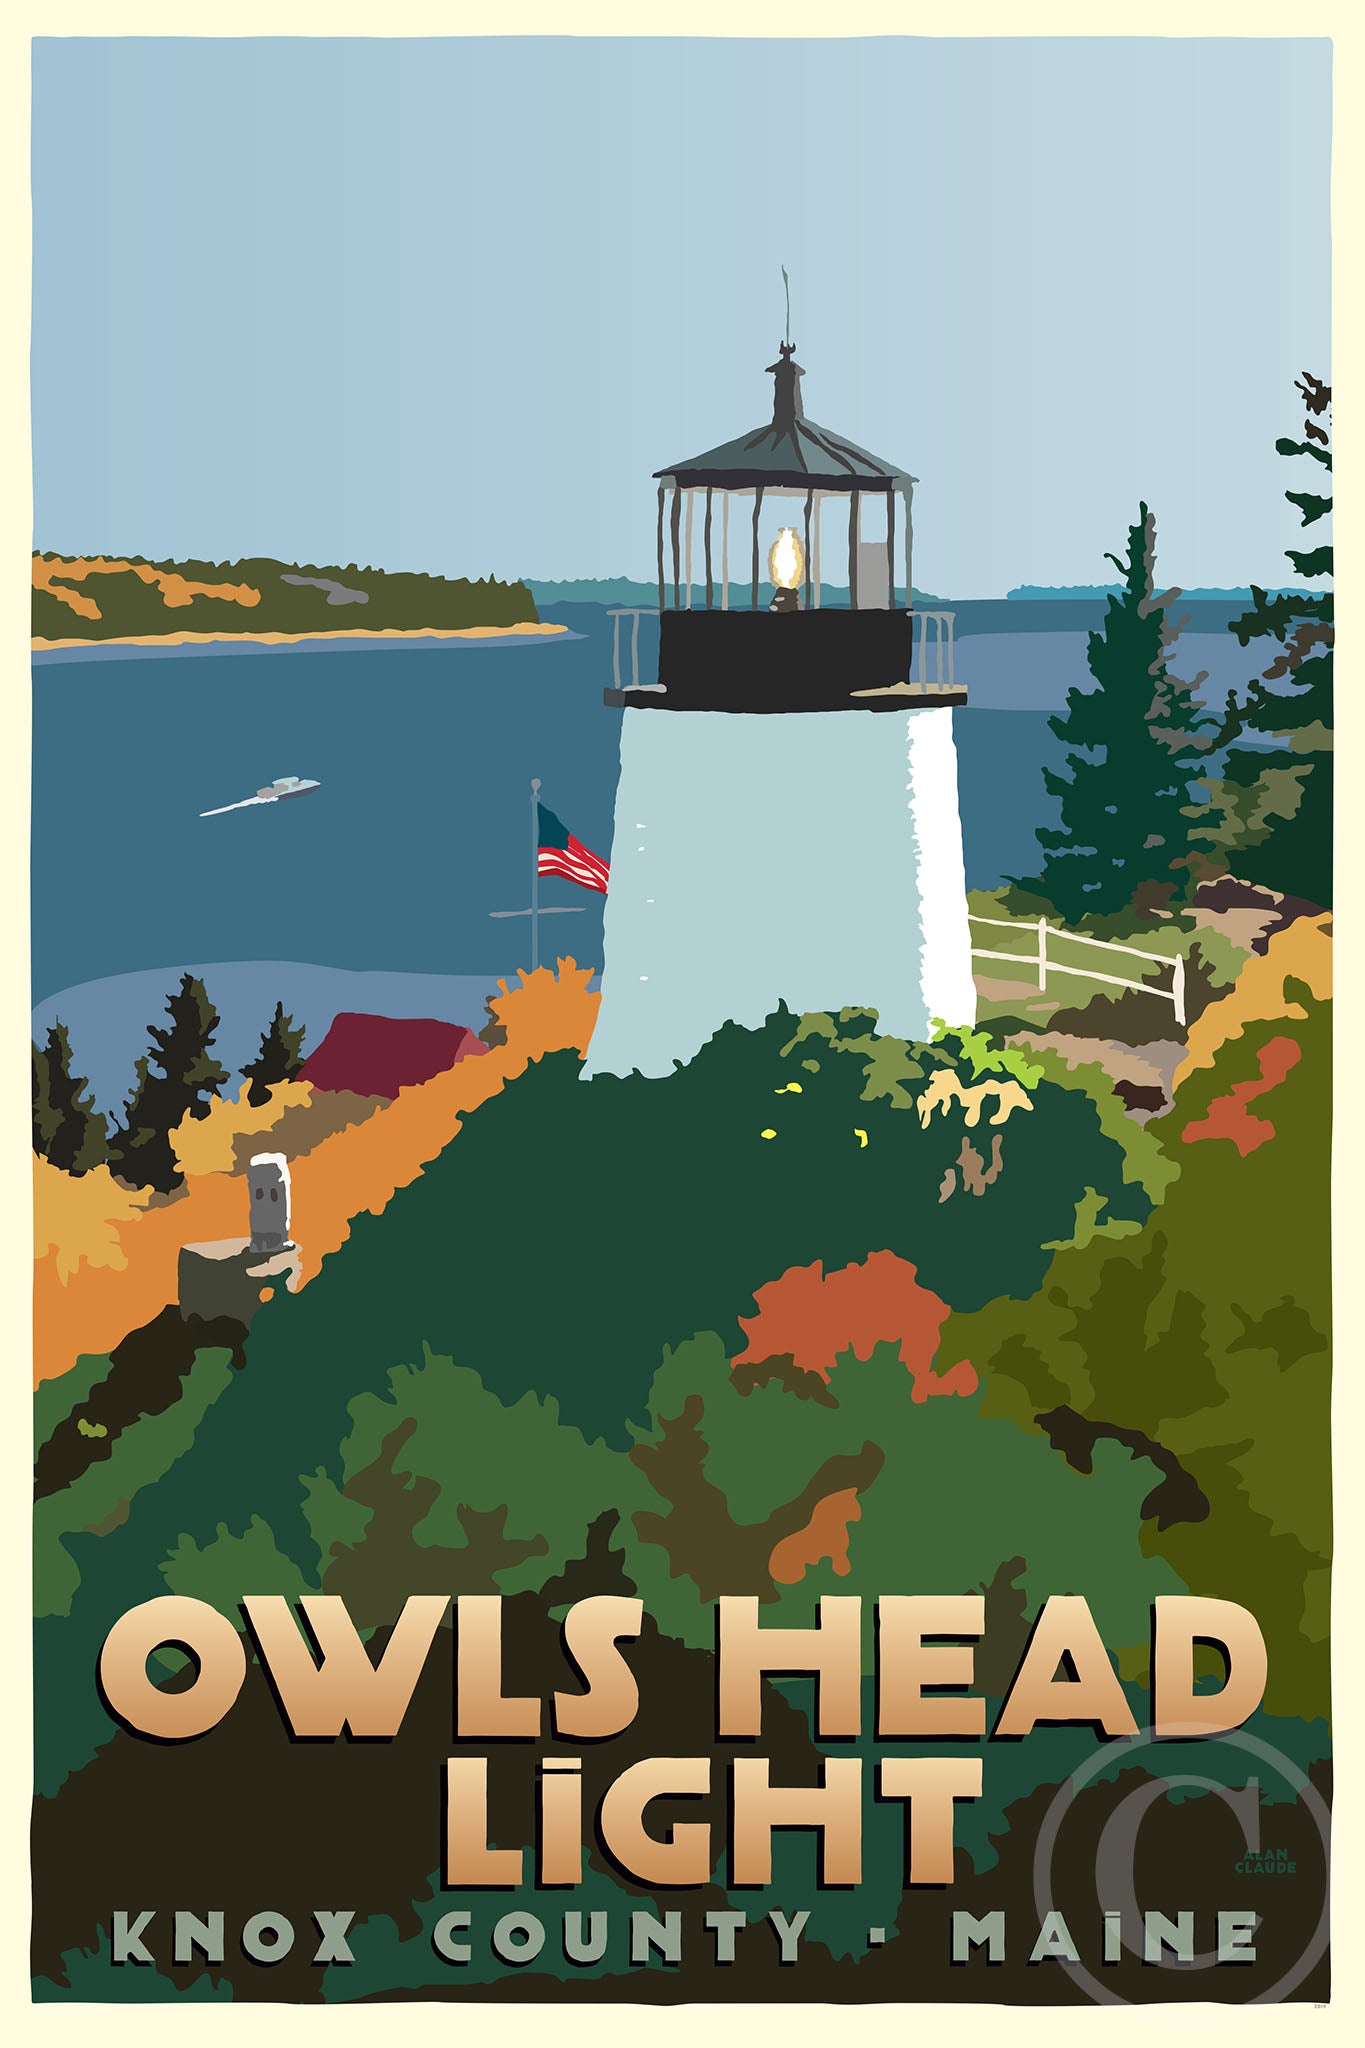 Above Owls Head Light Art Print 24" x 36" Travel Poster By Alan Claude - Maine